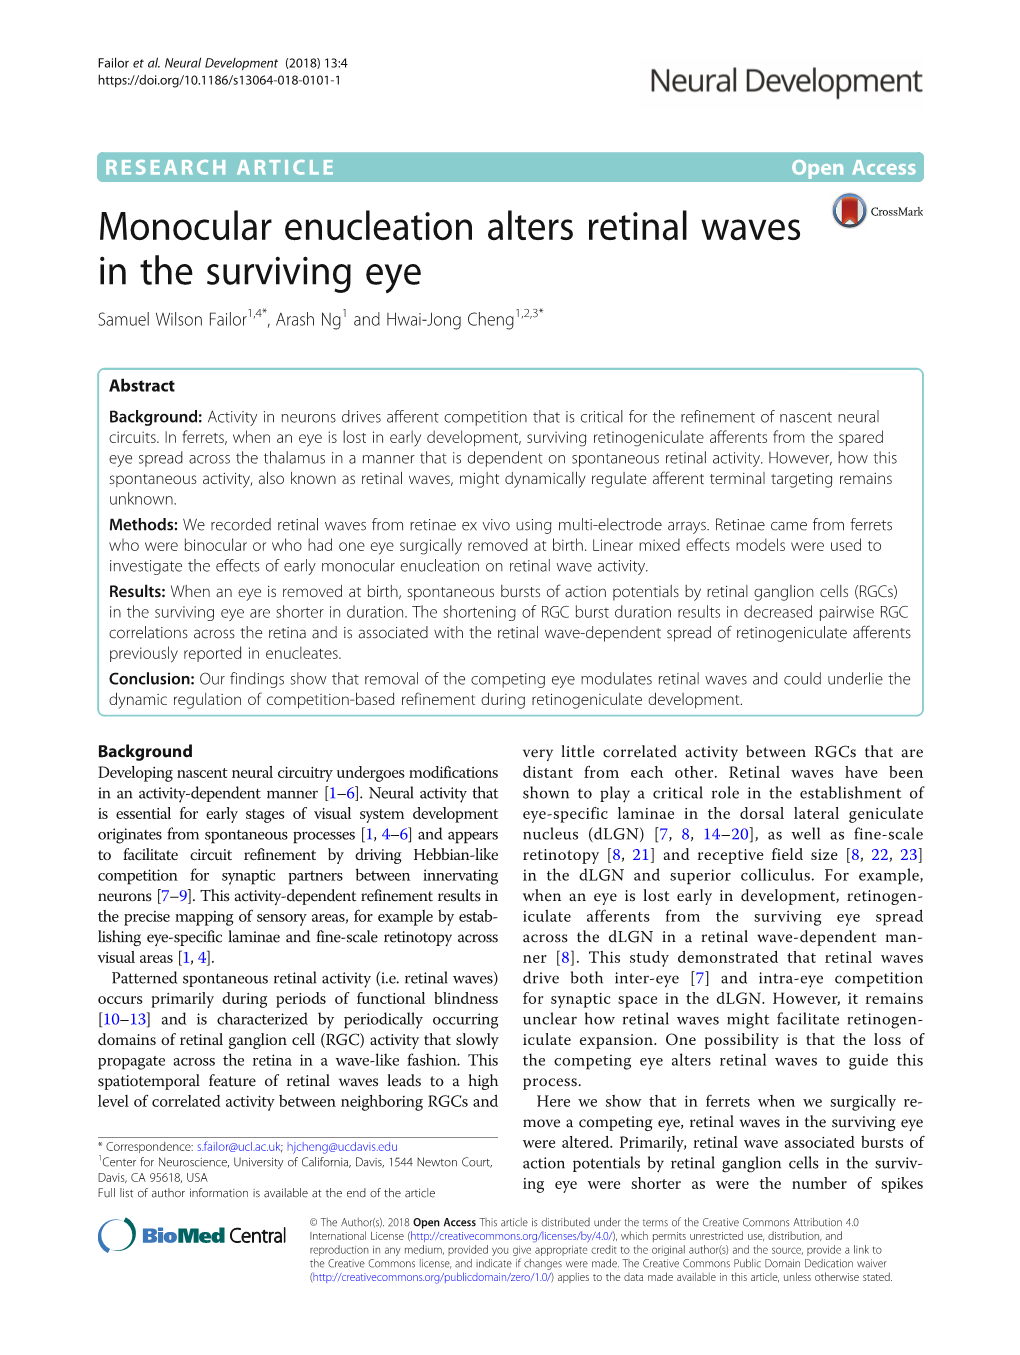 Monocular Enucleation Alters Retinal Waves in the Surviving Eye Samuel Wilson Failor1,4*, Arash Ng1 and Hwai-Jong Cheng1,2,3*